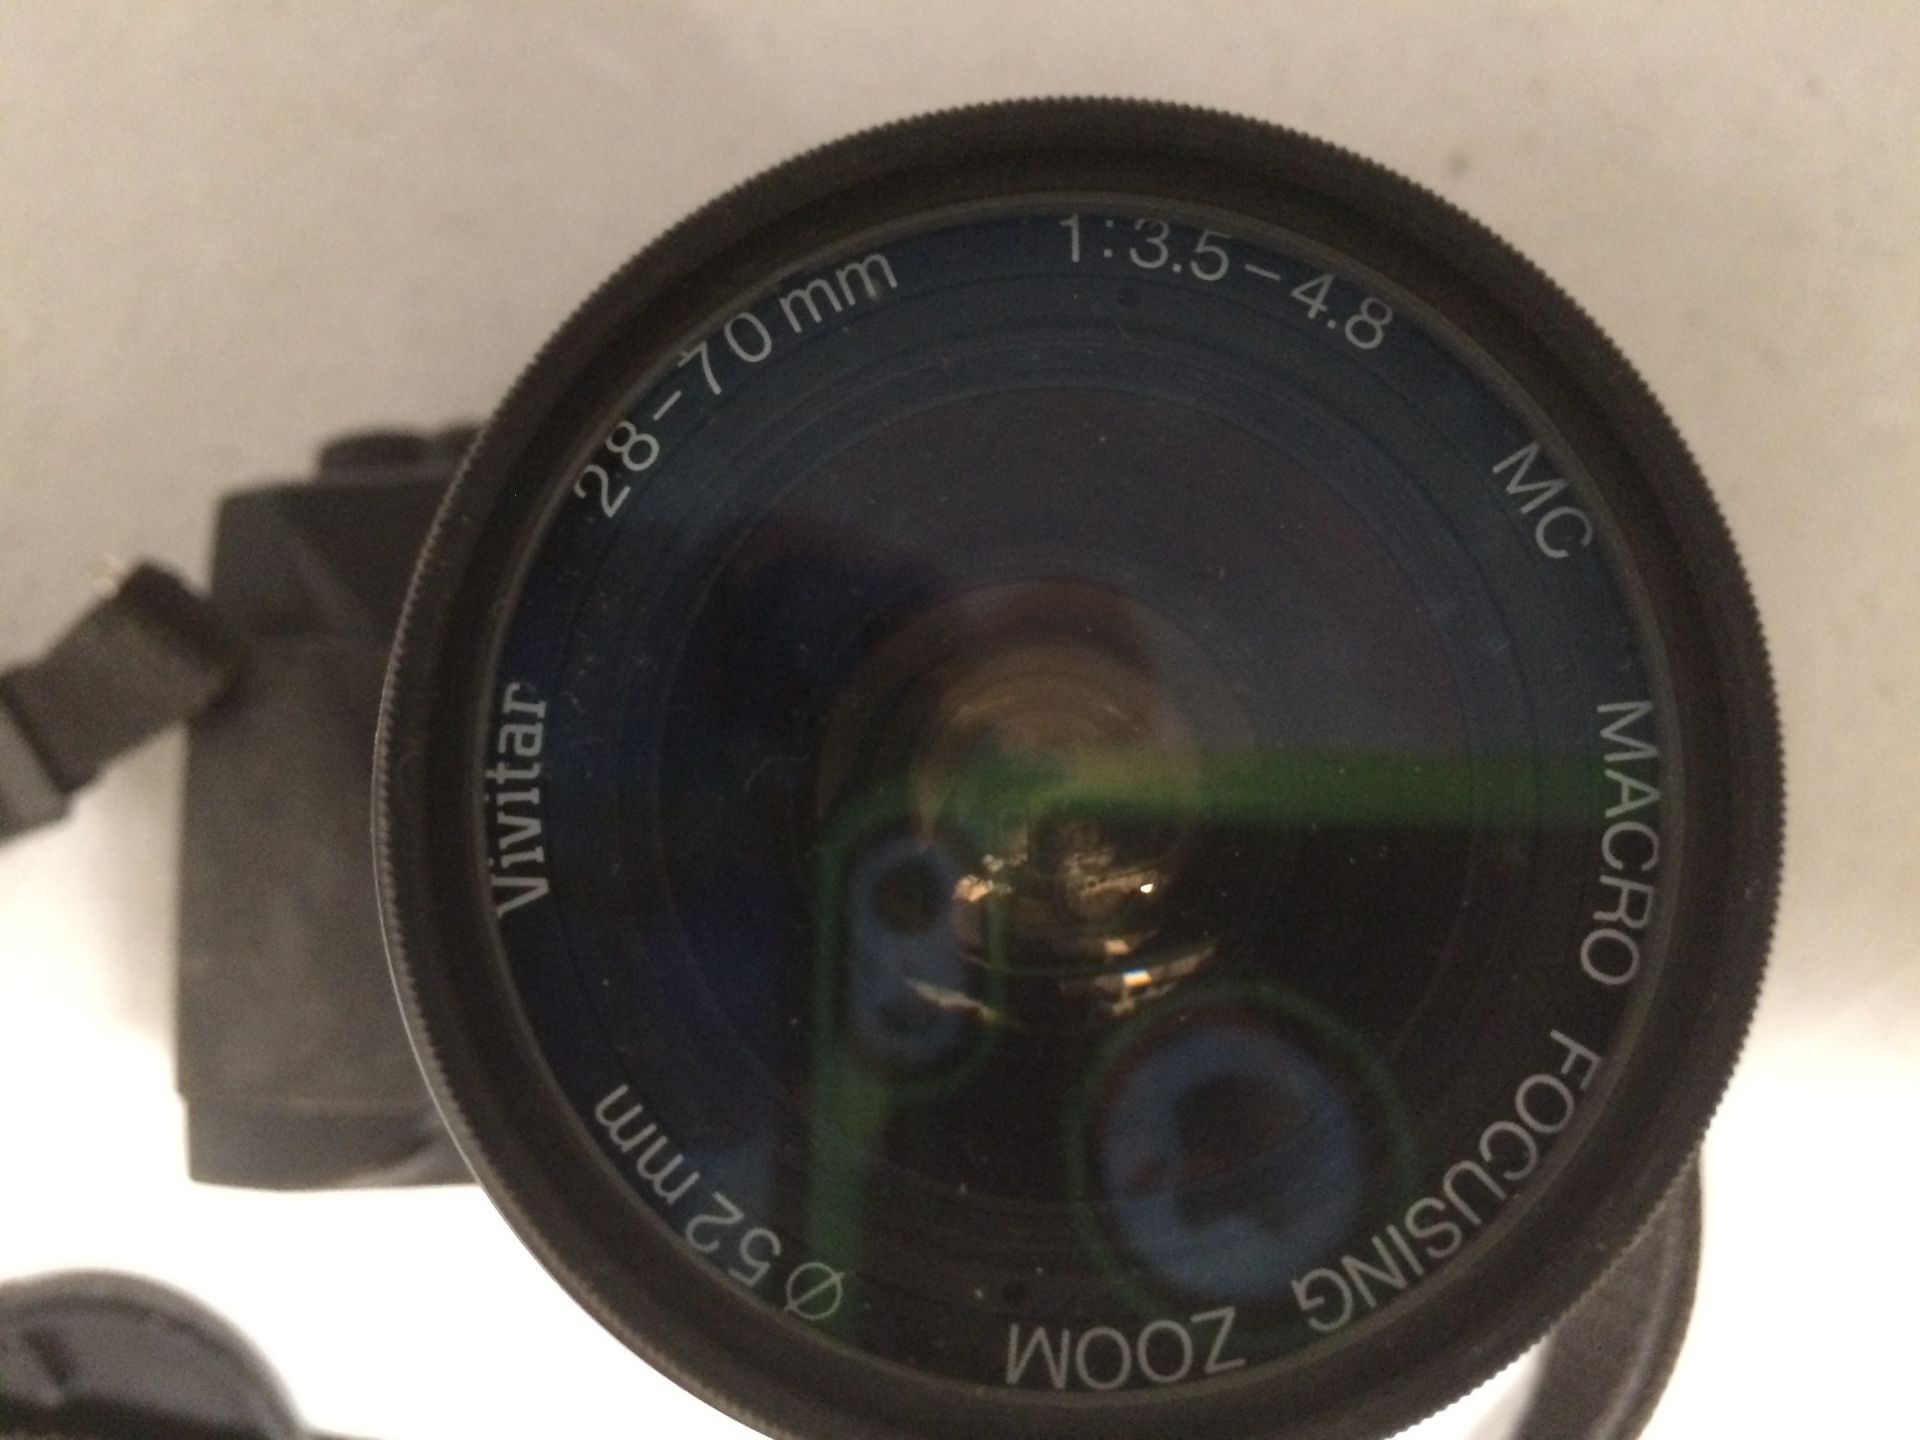 Vivitar V2000 camera with a Macro focusing zoom 28-70mm lens - Image 3 of 4